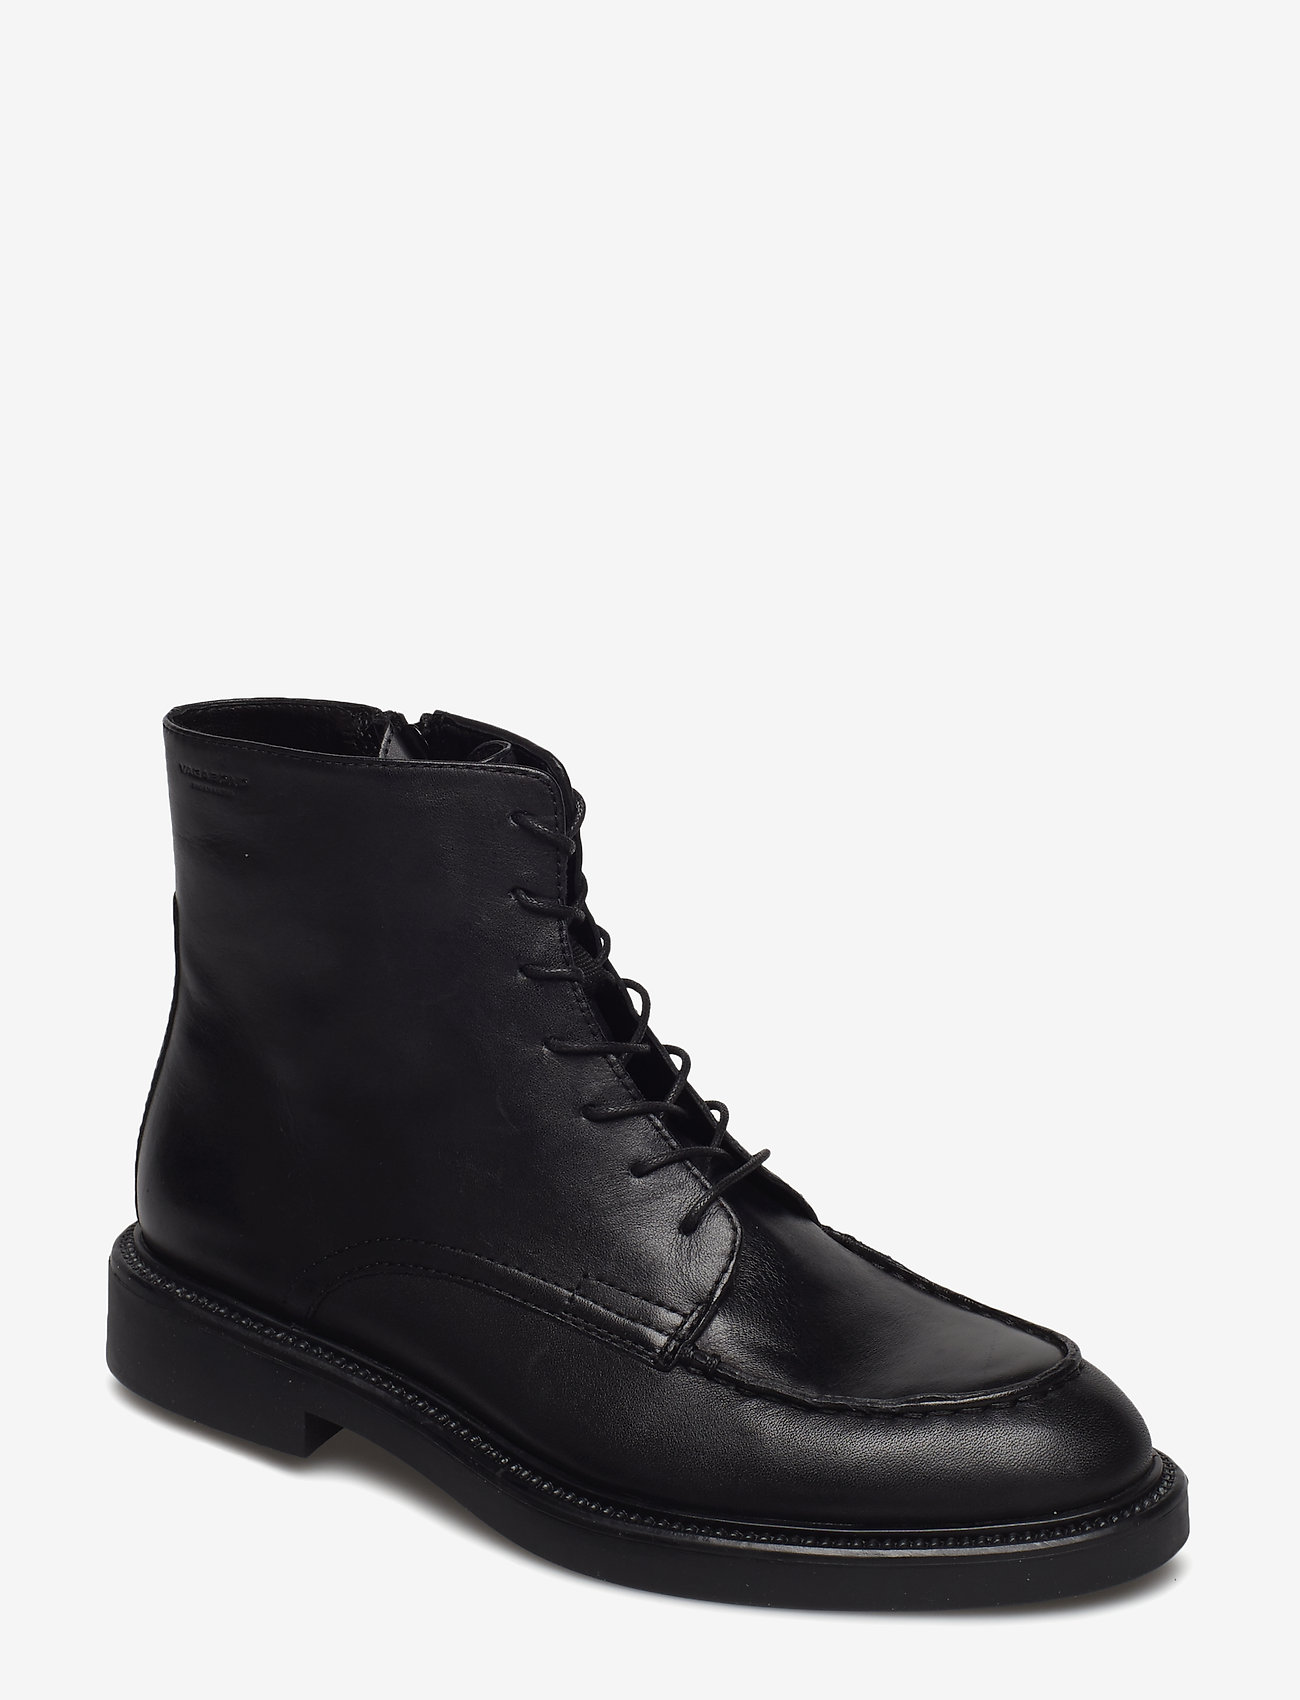 vagabond alex boots